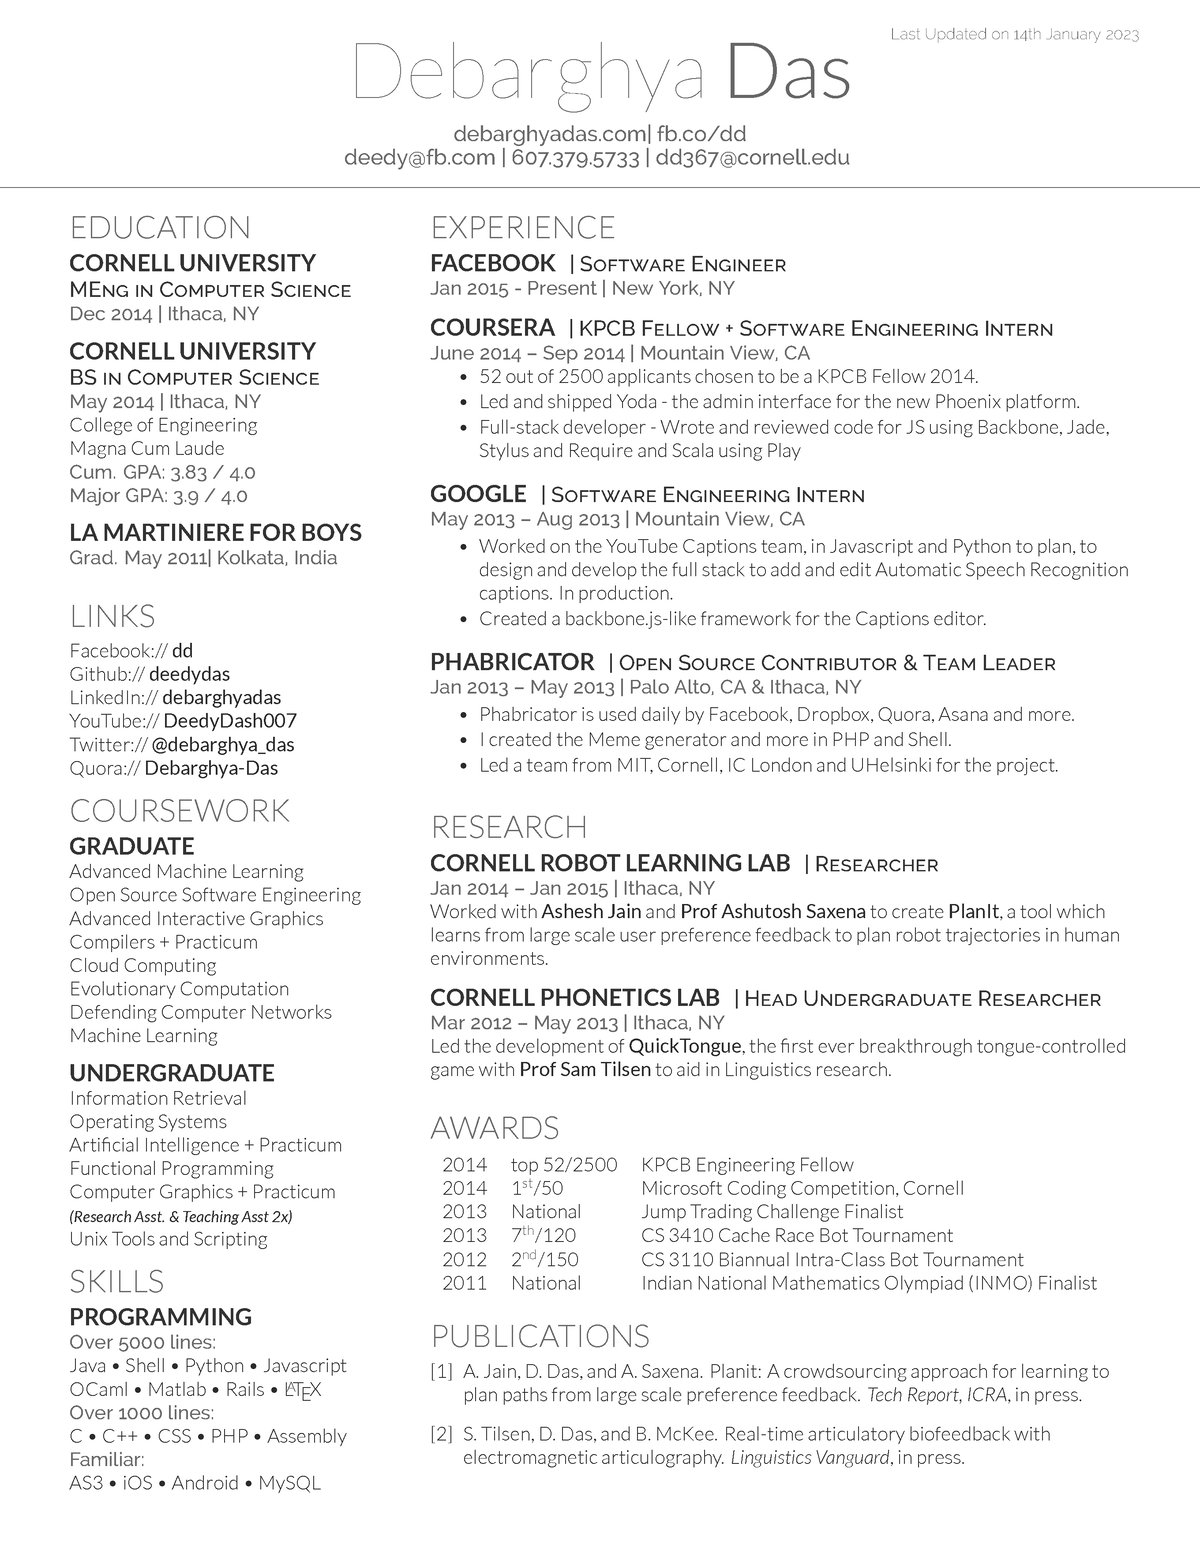 deedy-cv-3-sample-resume-template-last-updated-on-14th-january-2023